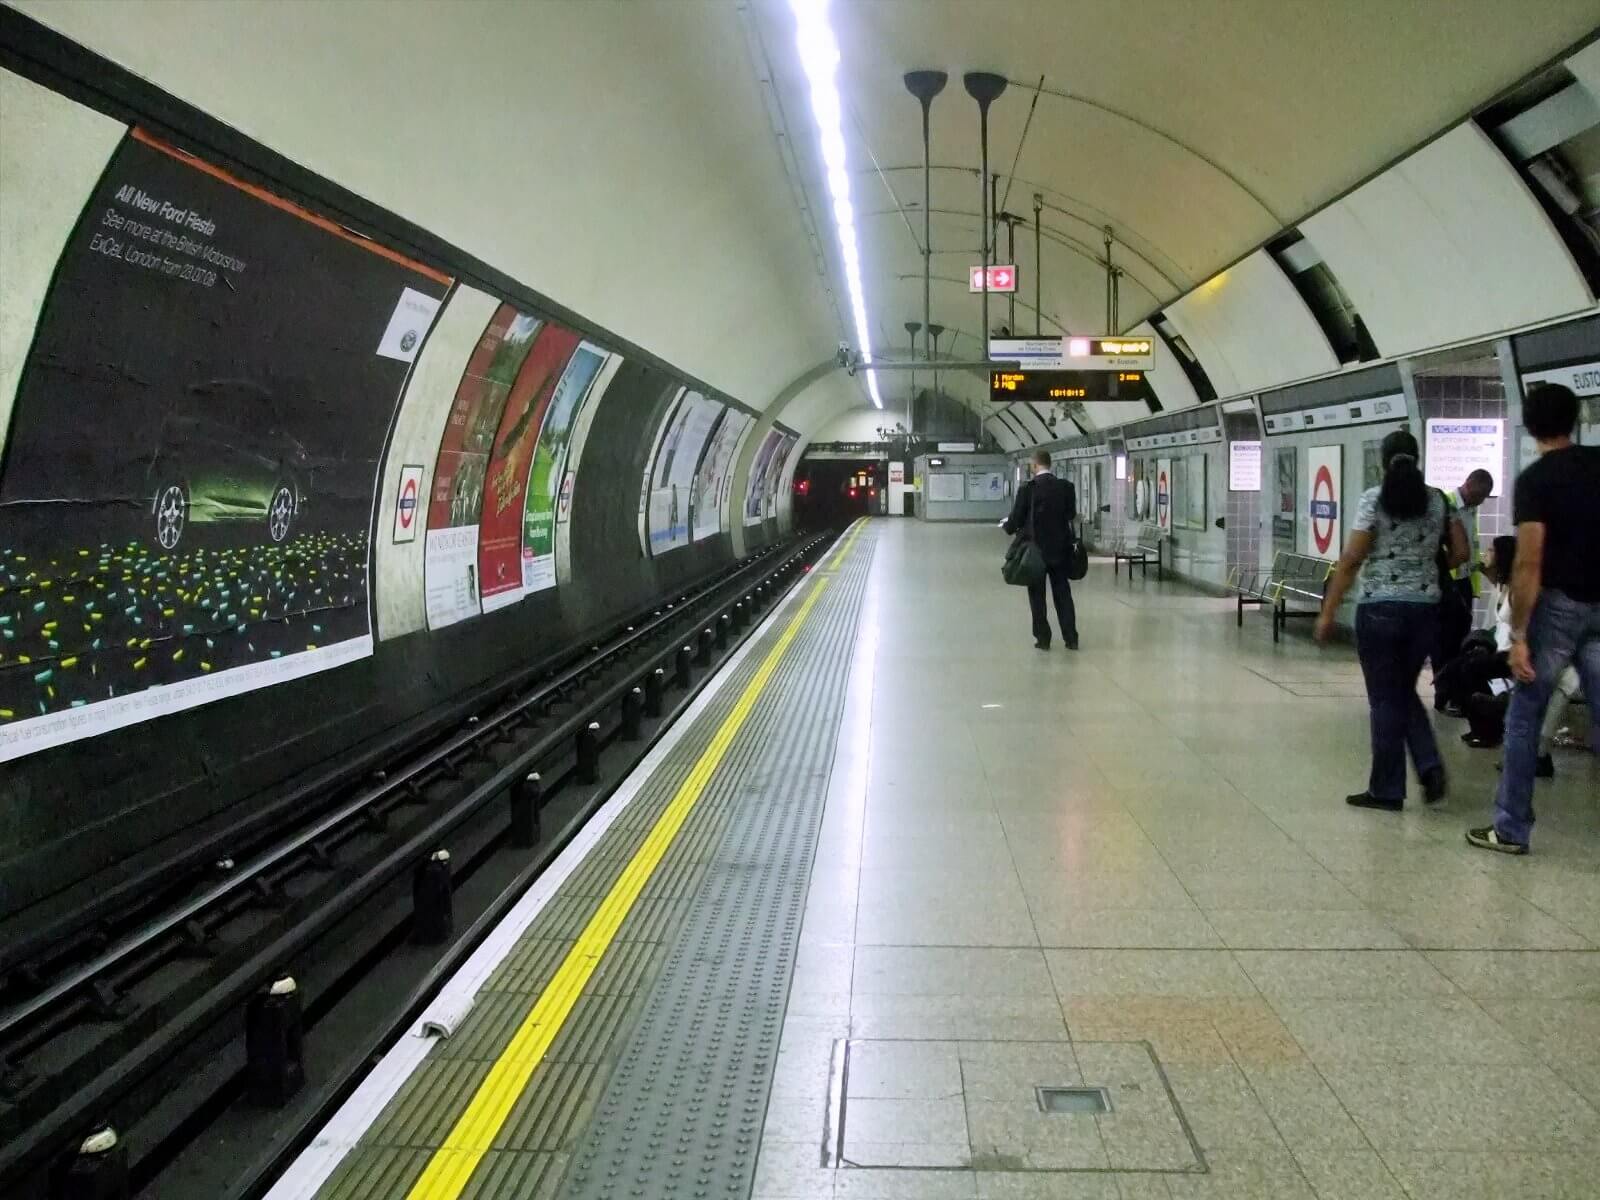 Transport Secretary tours £700 million Victoria tube station upgrade